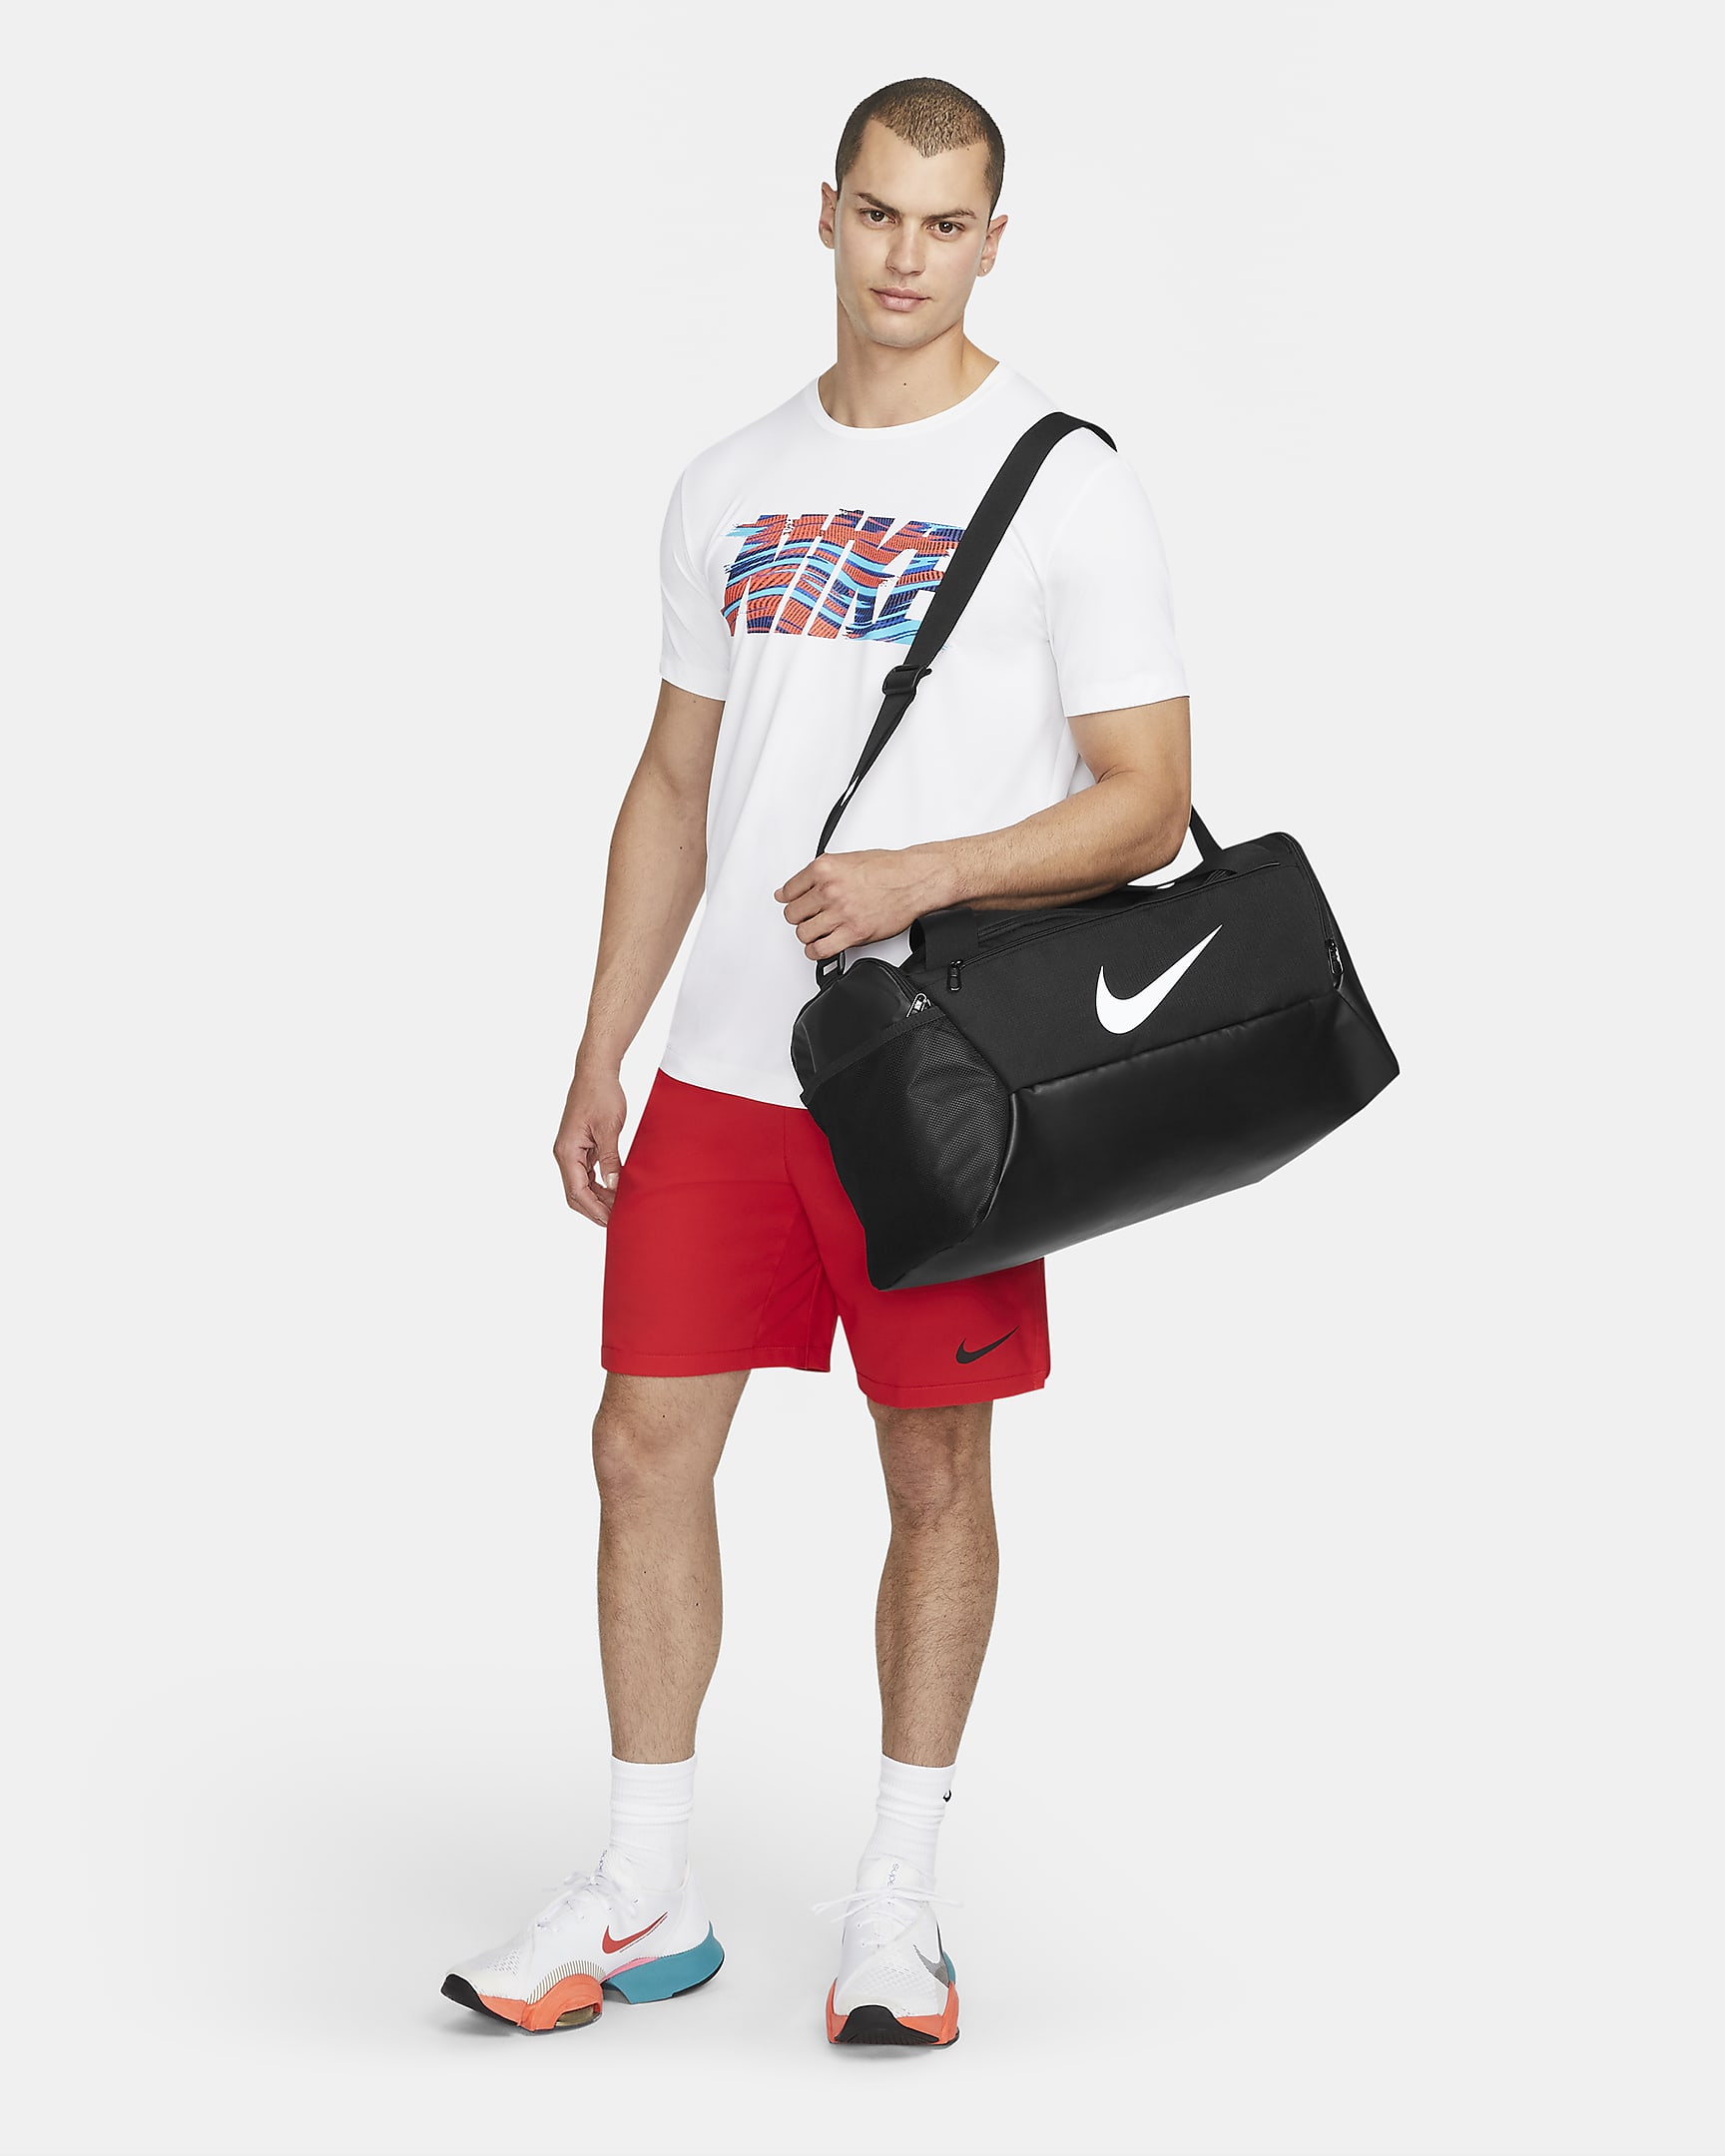 Nike Brasilia 9.5 Training Duffel Bag (Small, 41L) - Black/Black/White